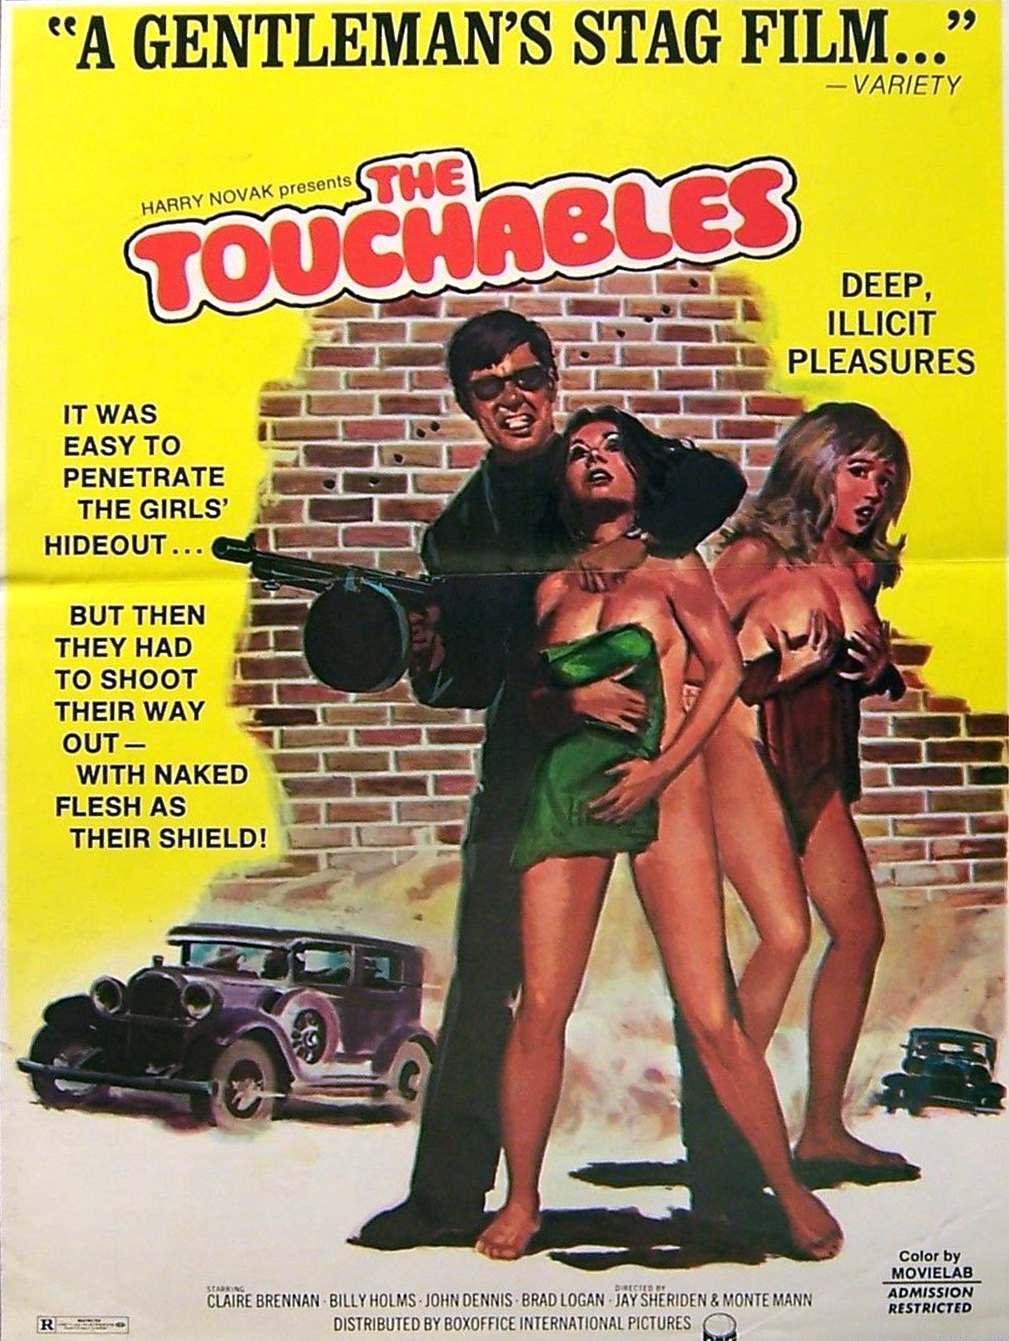 sexploitation movie poster (20)